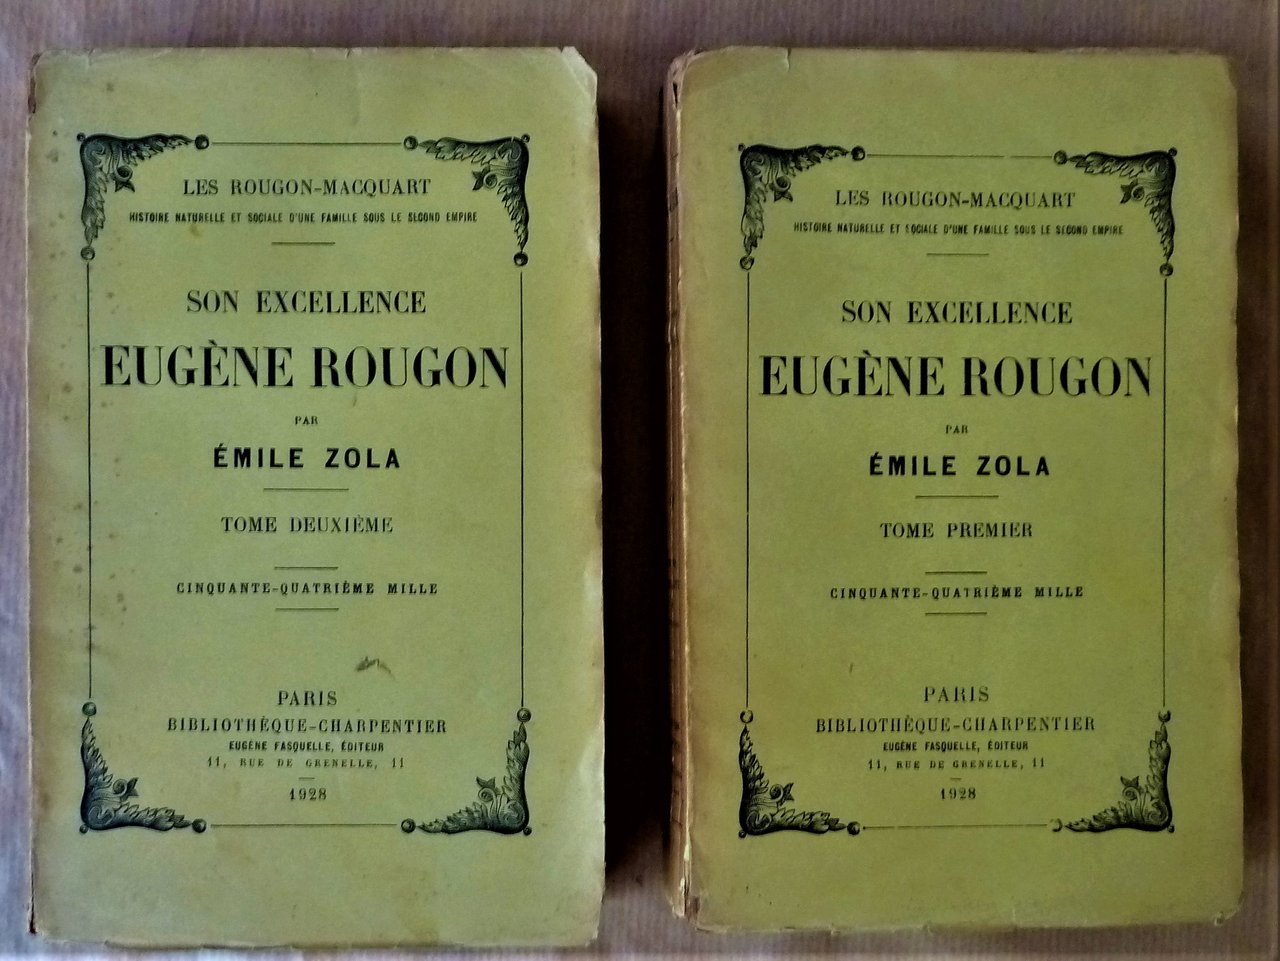 Son Excellence Eugène Rougon.